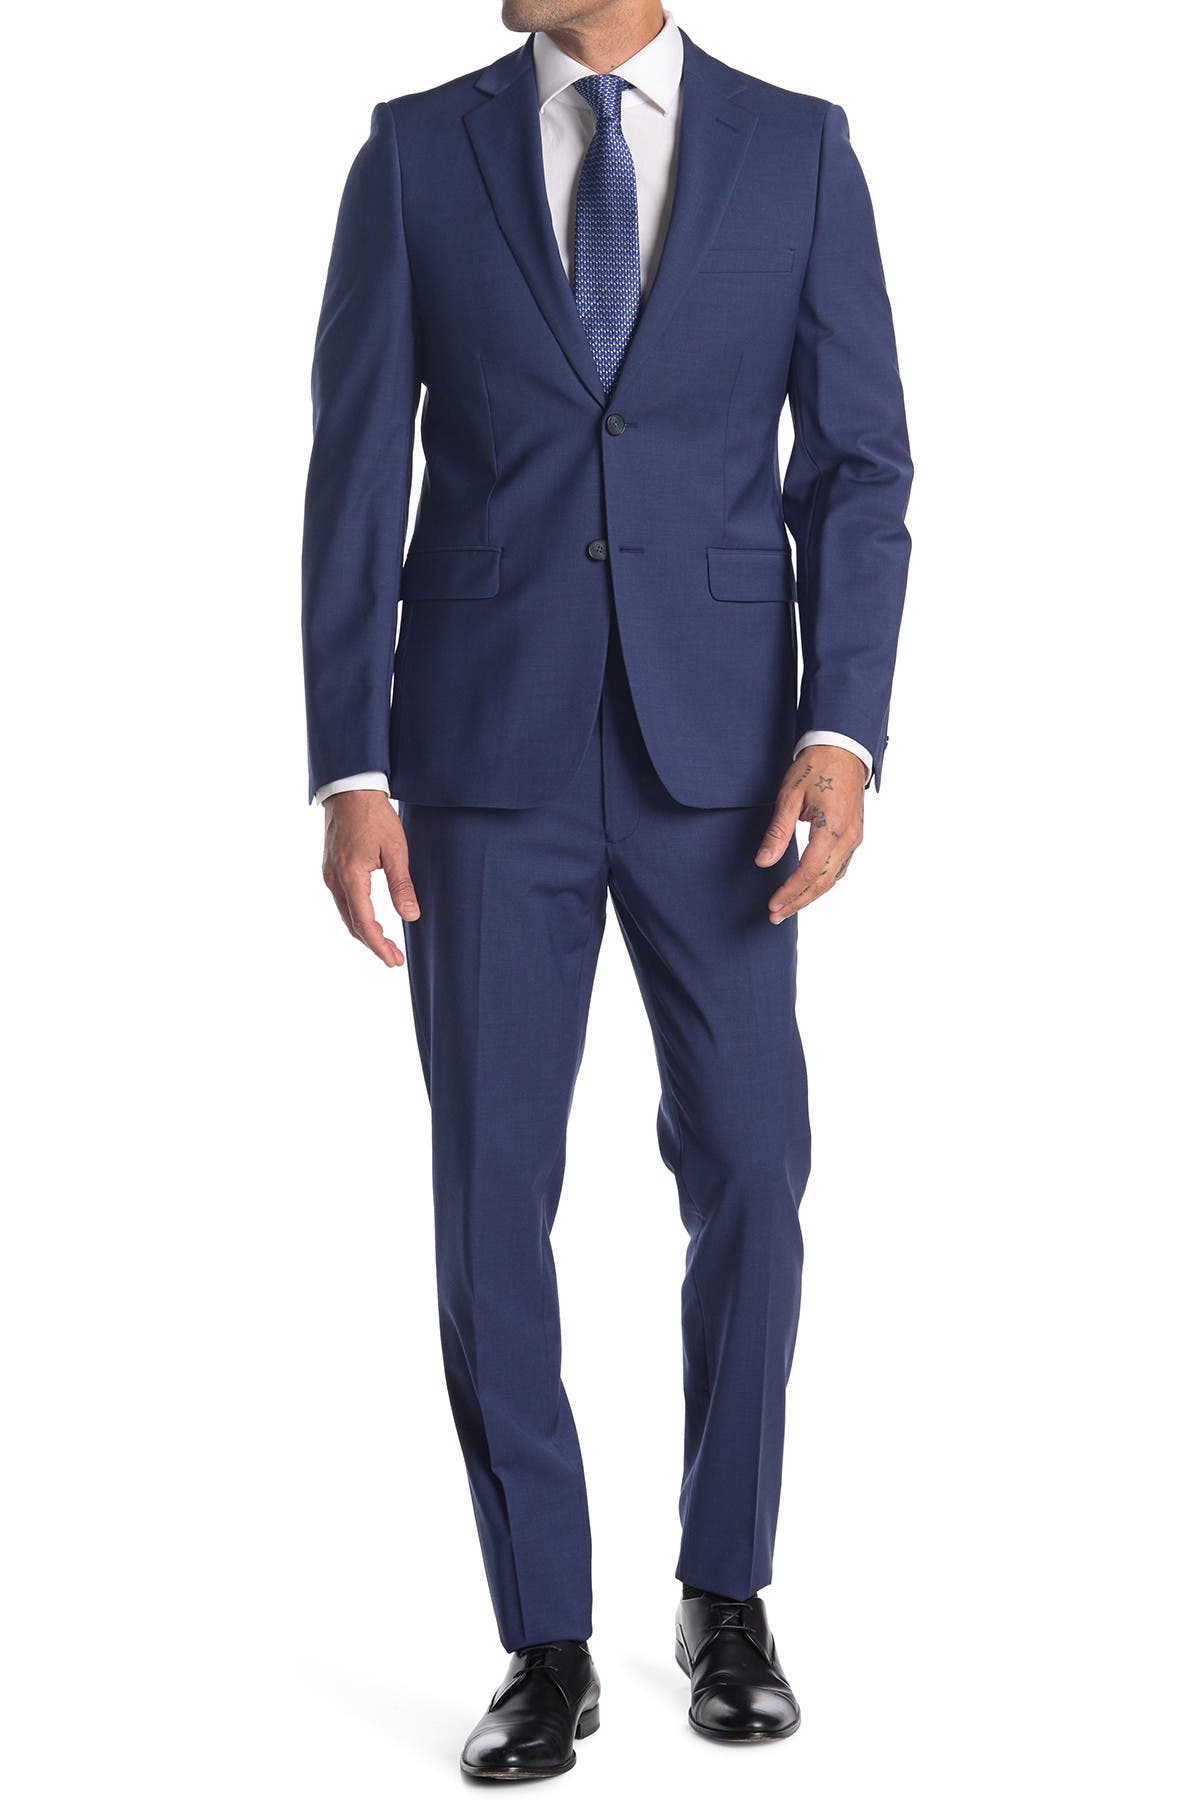 tommy hilfiger adams suit